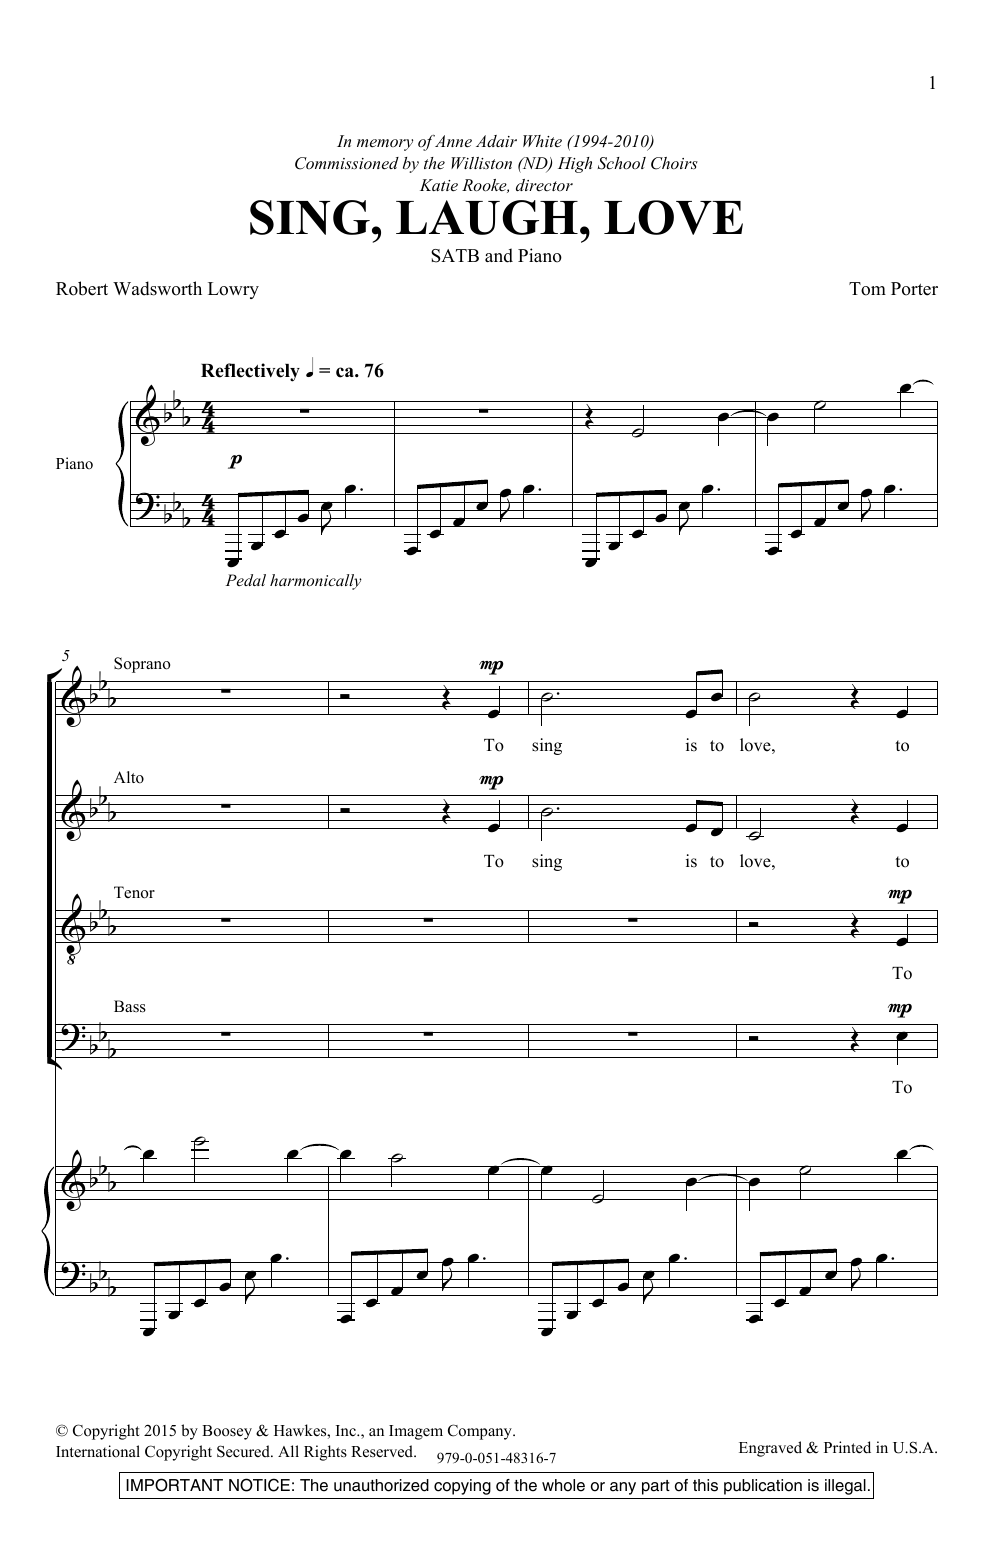 Thomas Porter Sing, Laugh, Love Sheet Music Notes & Chords for SATB - Download or Print PDF